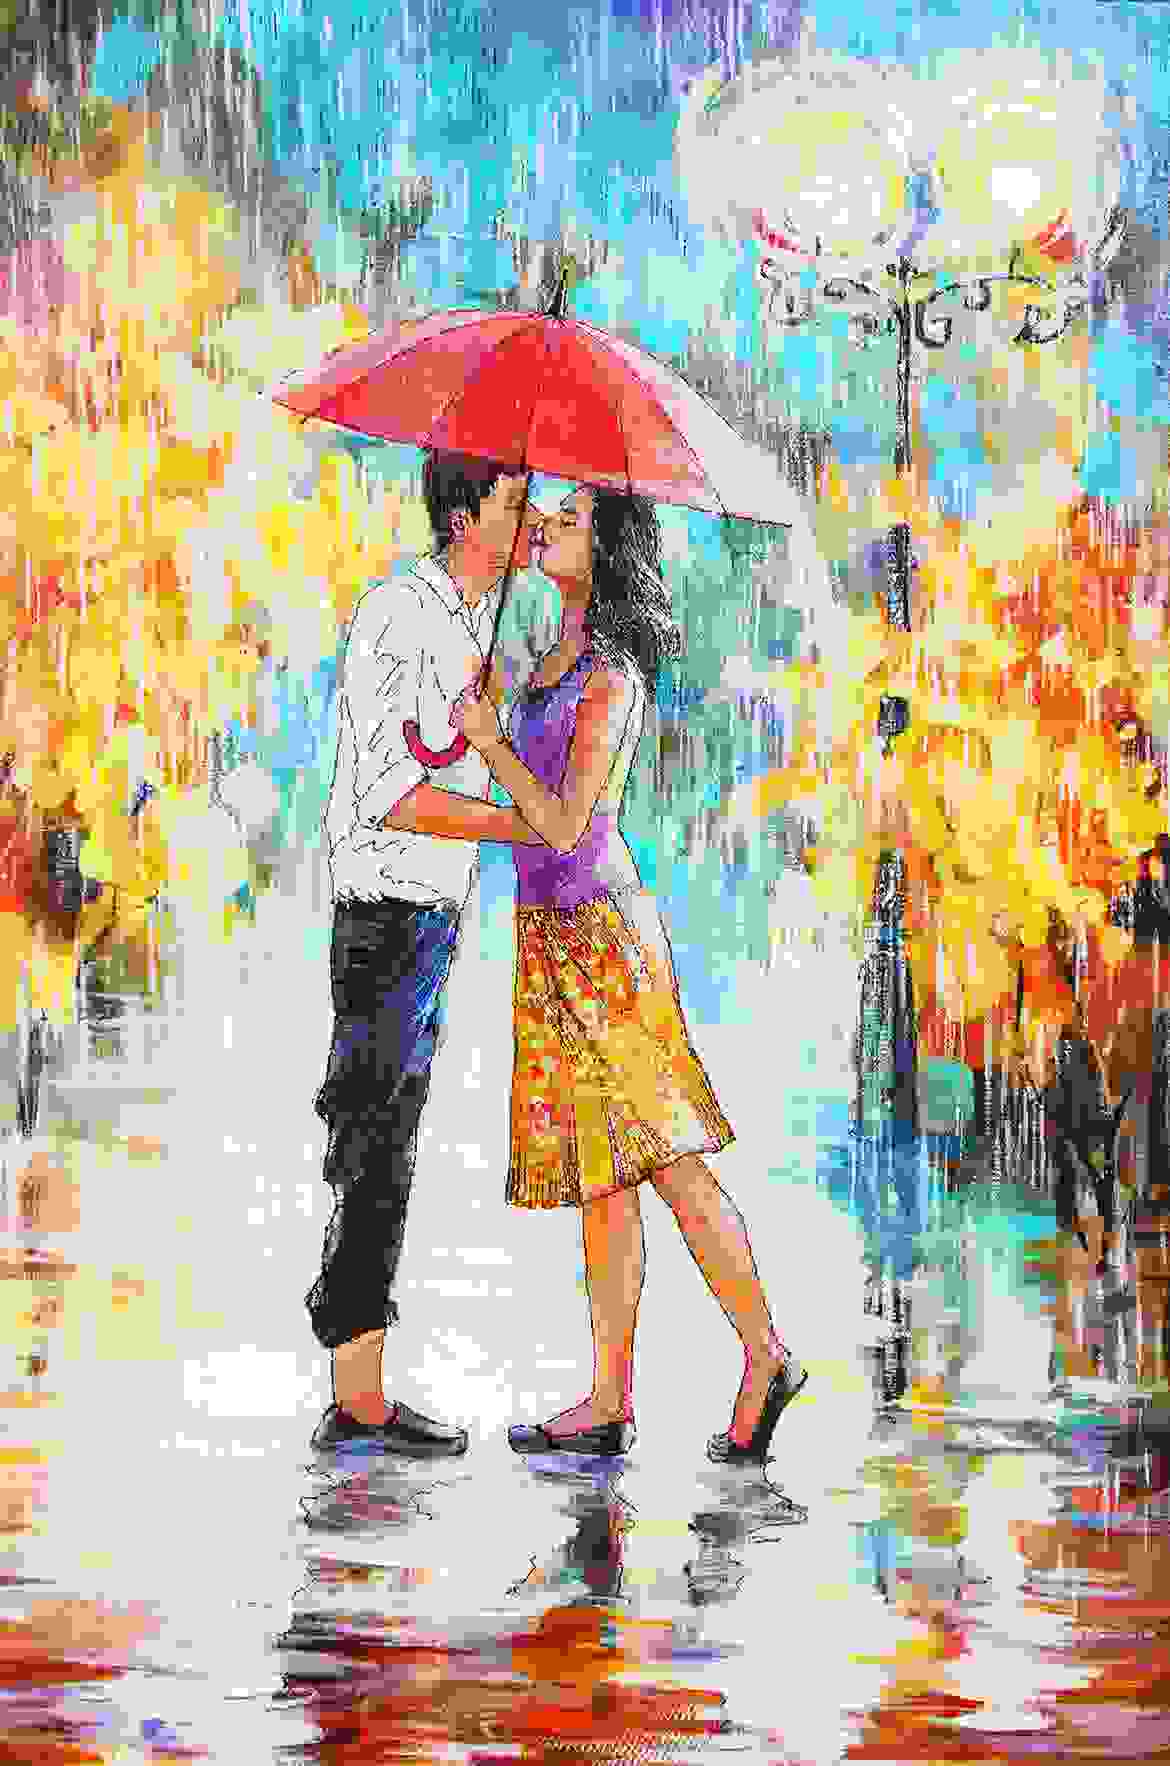 Rainy season welcomes the romantics